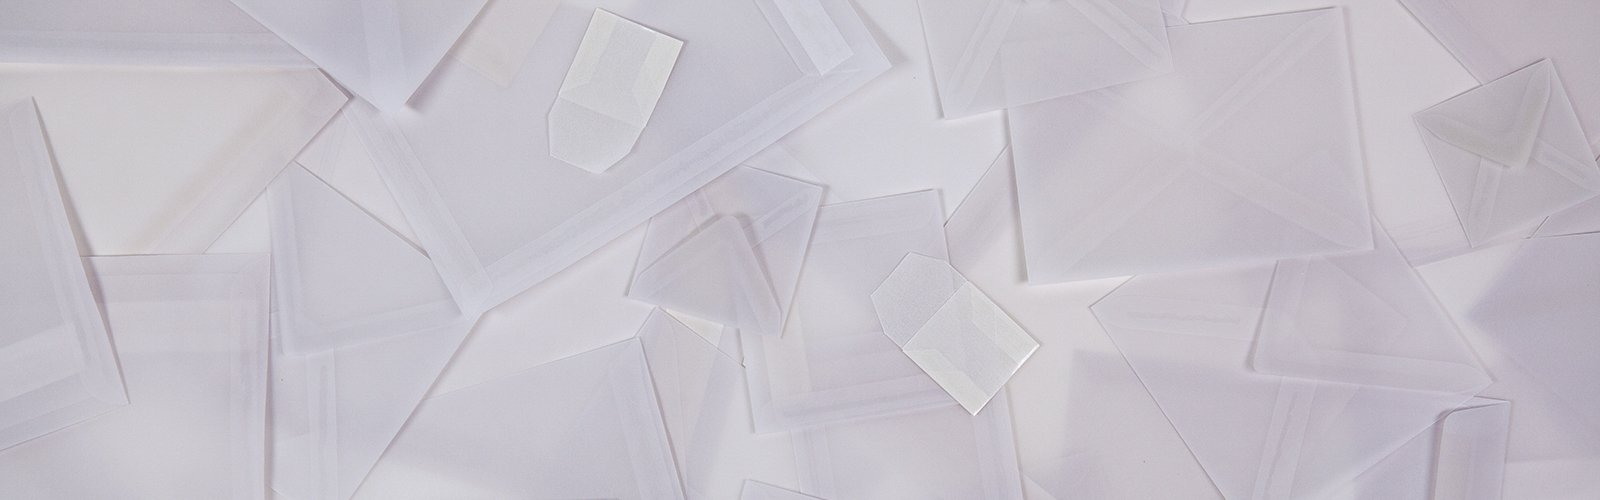 Transparante witte enveloppen